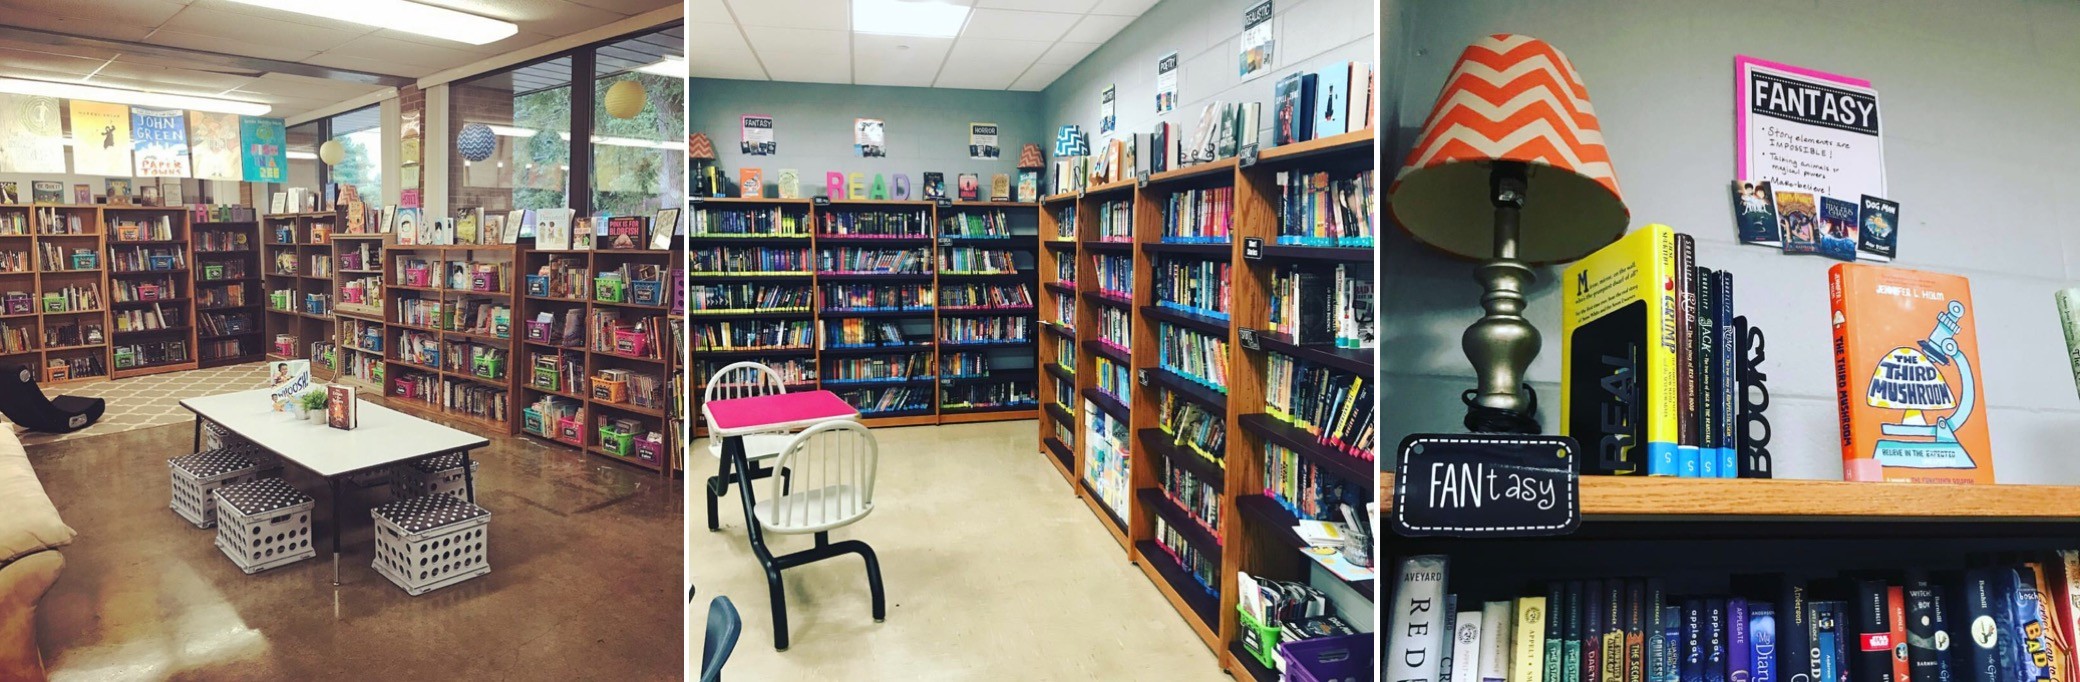 Middle school classroom library #ClassroomLibrary #MiddleSchoolELA